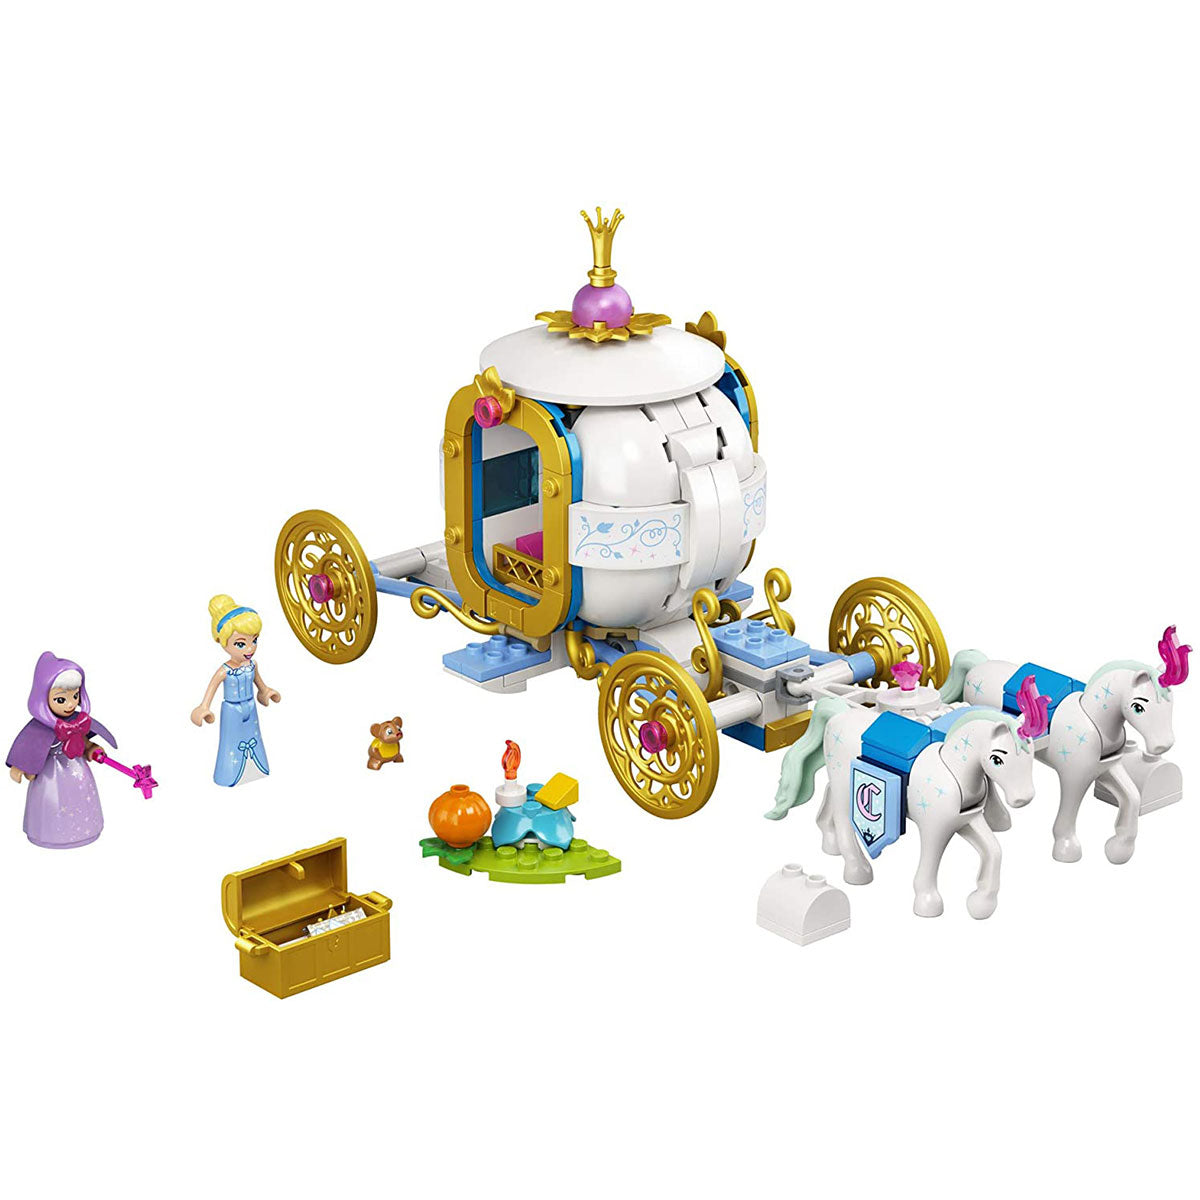 LEGO - Disney Cinderella Royal Carriage 43192